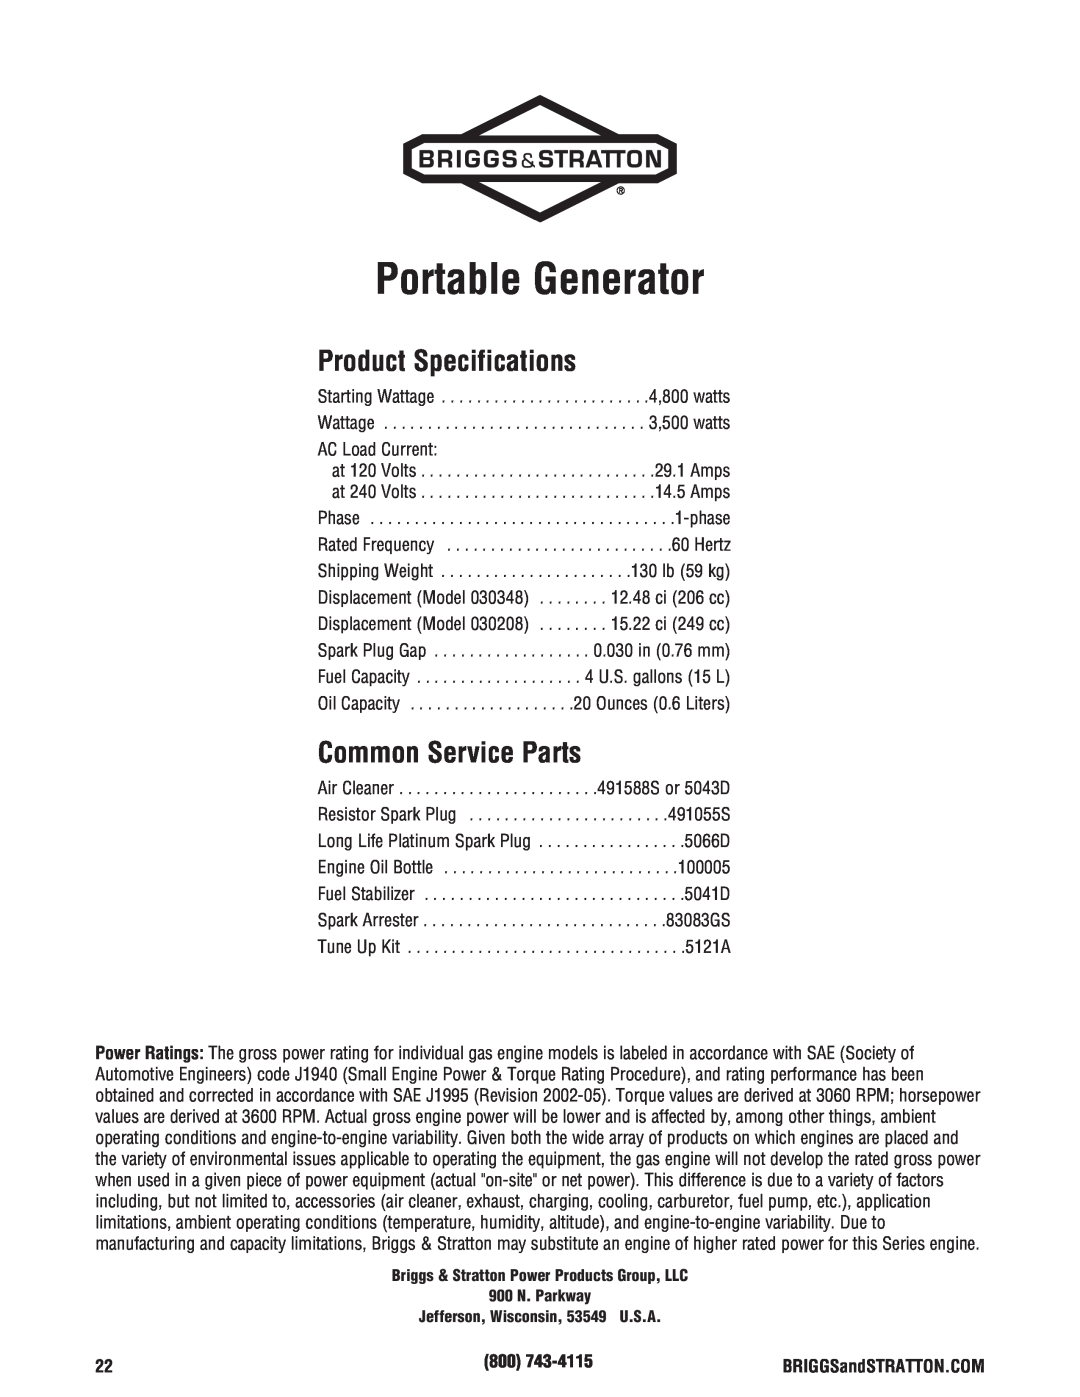 Briggs & Stratton 30348 manual Portable Generator, Product Specifications, Common Service Parts 